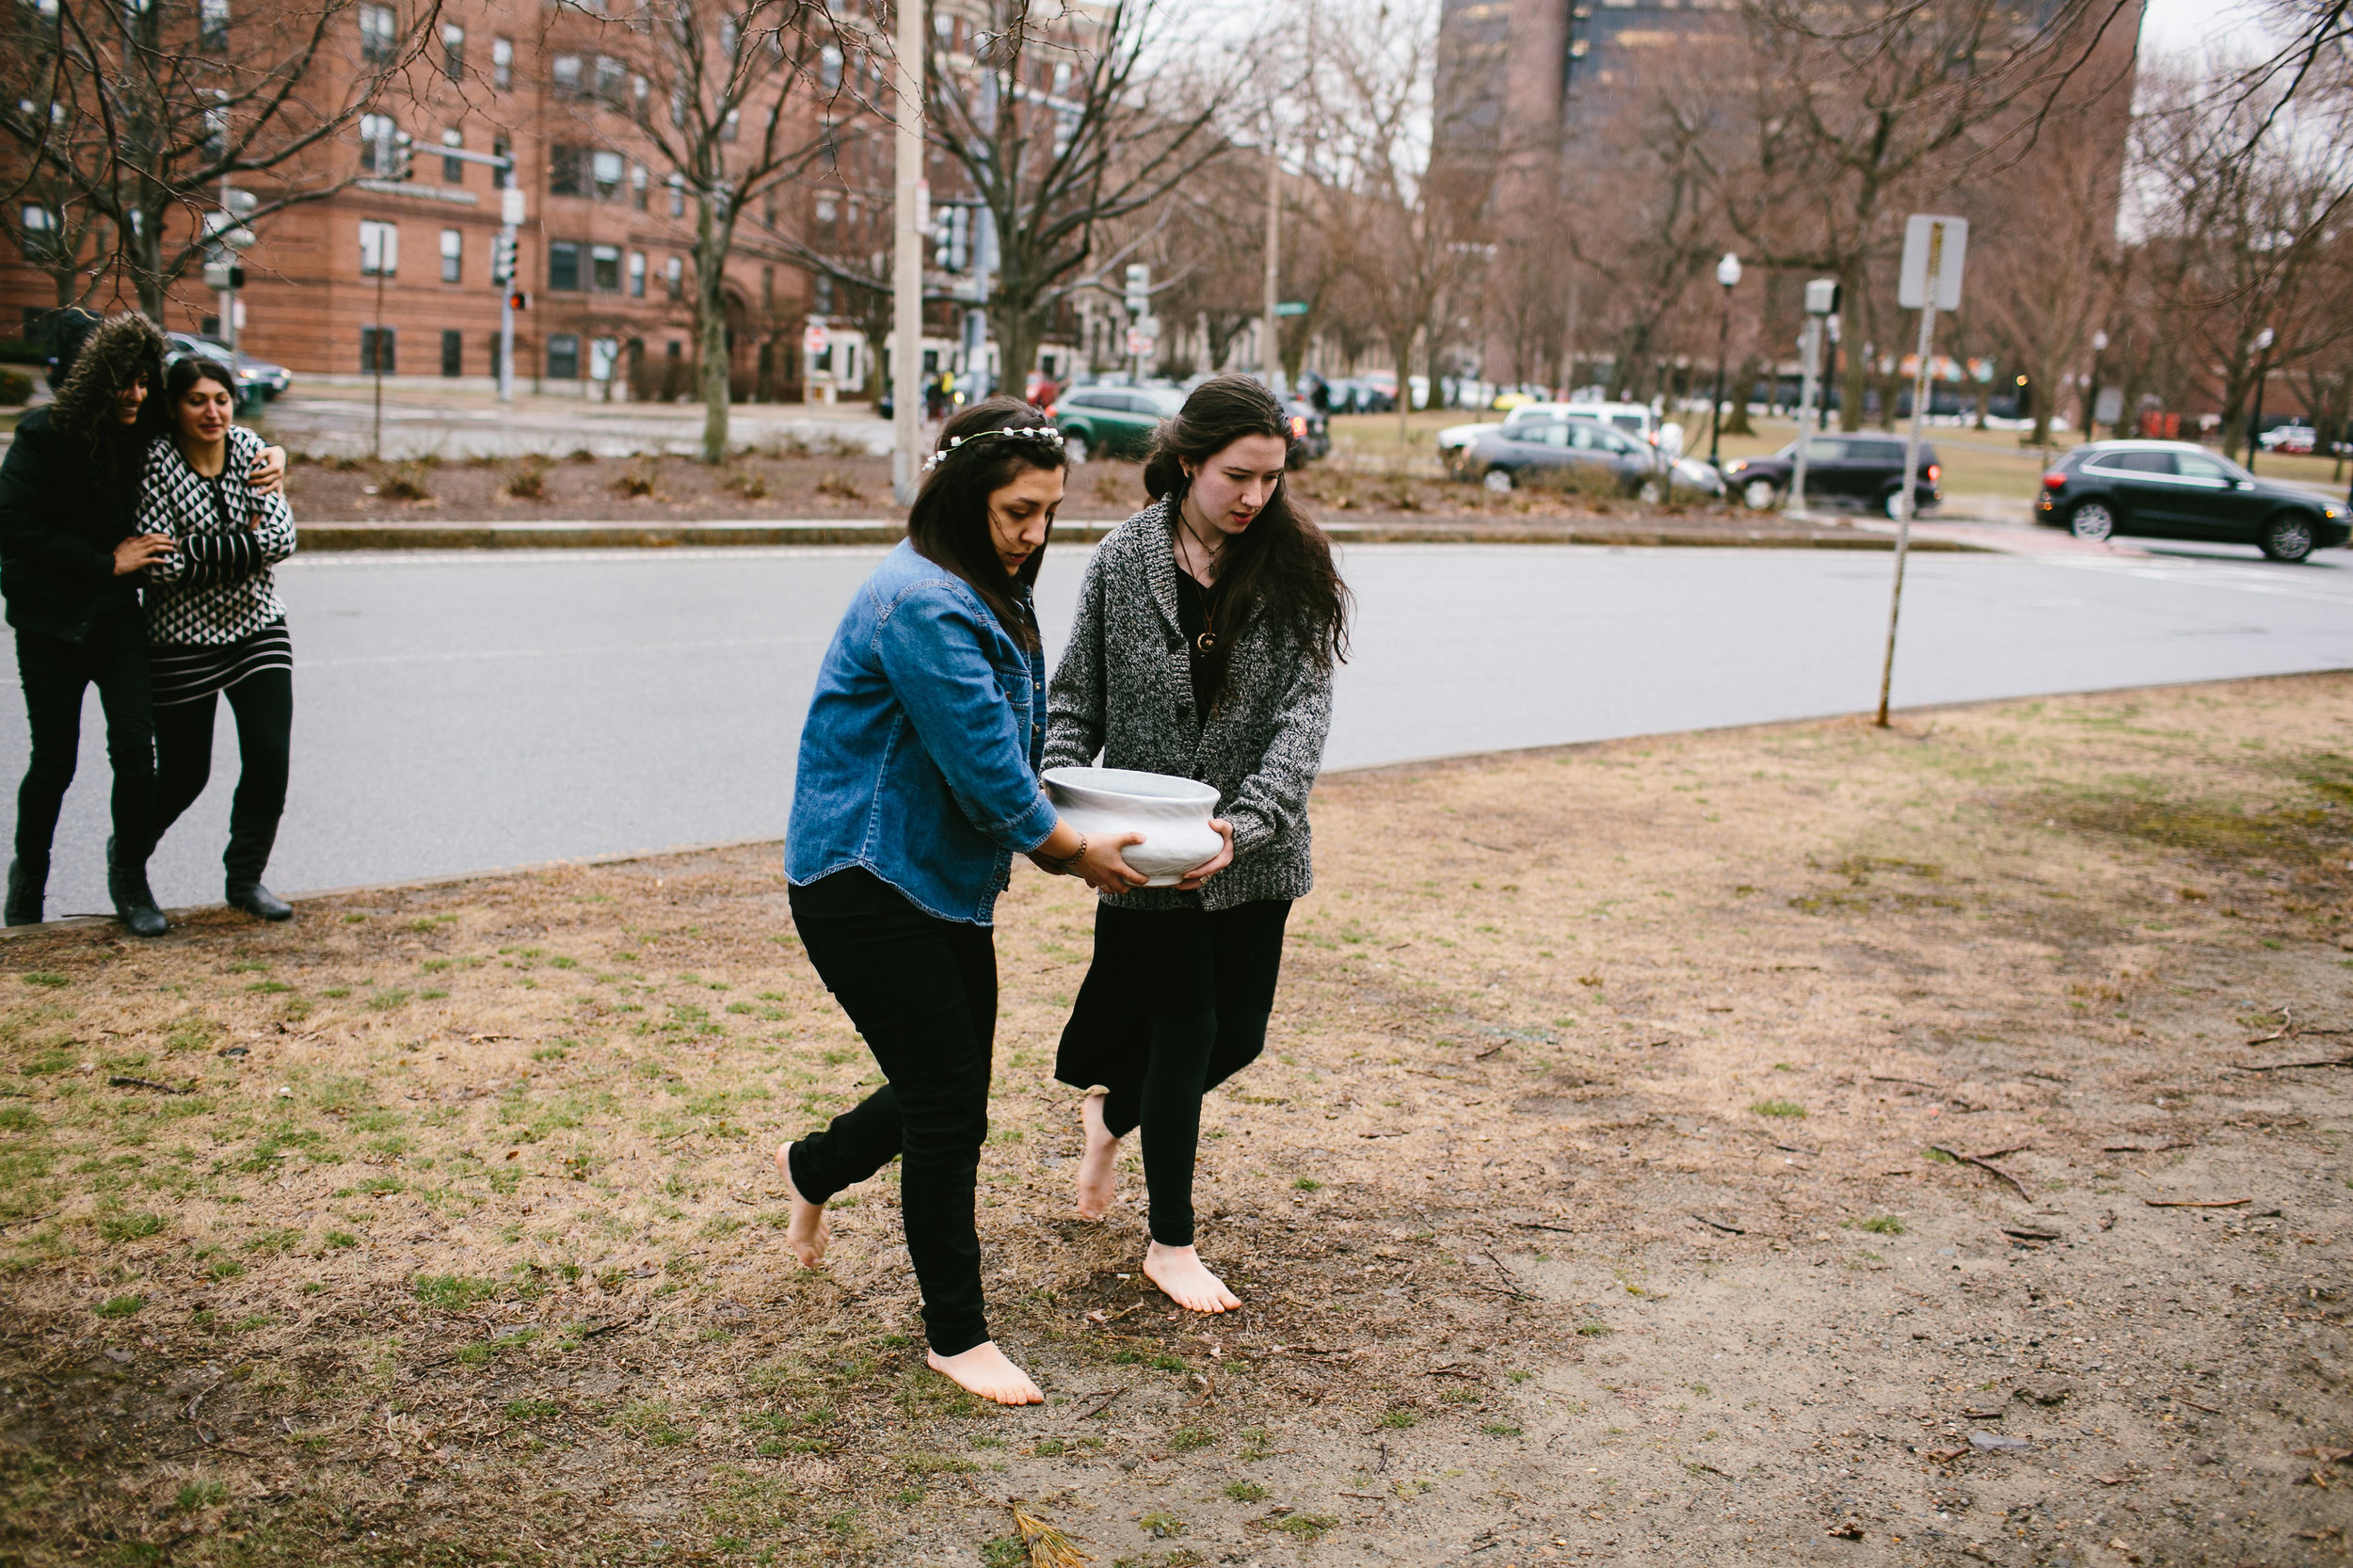 Artists barefoot carrying ritual low bowl through Boston MA Madeleine Kobold photography